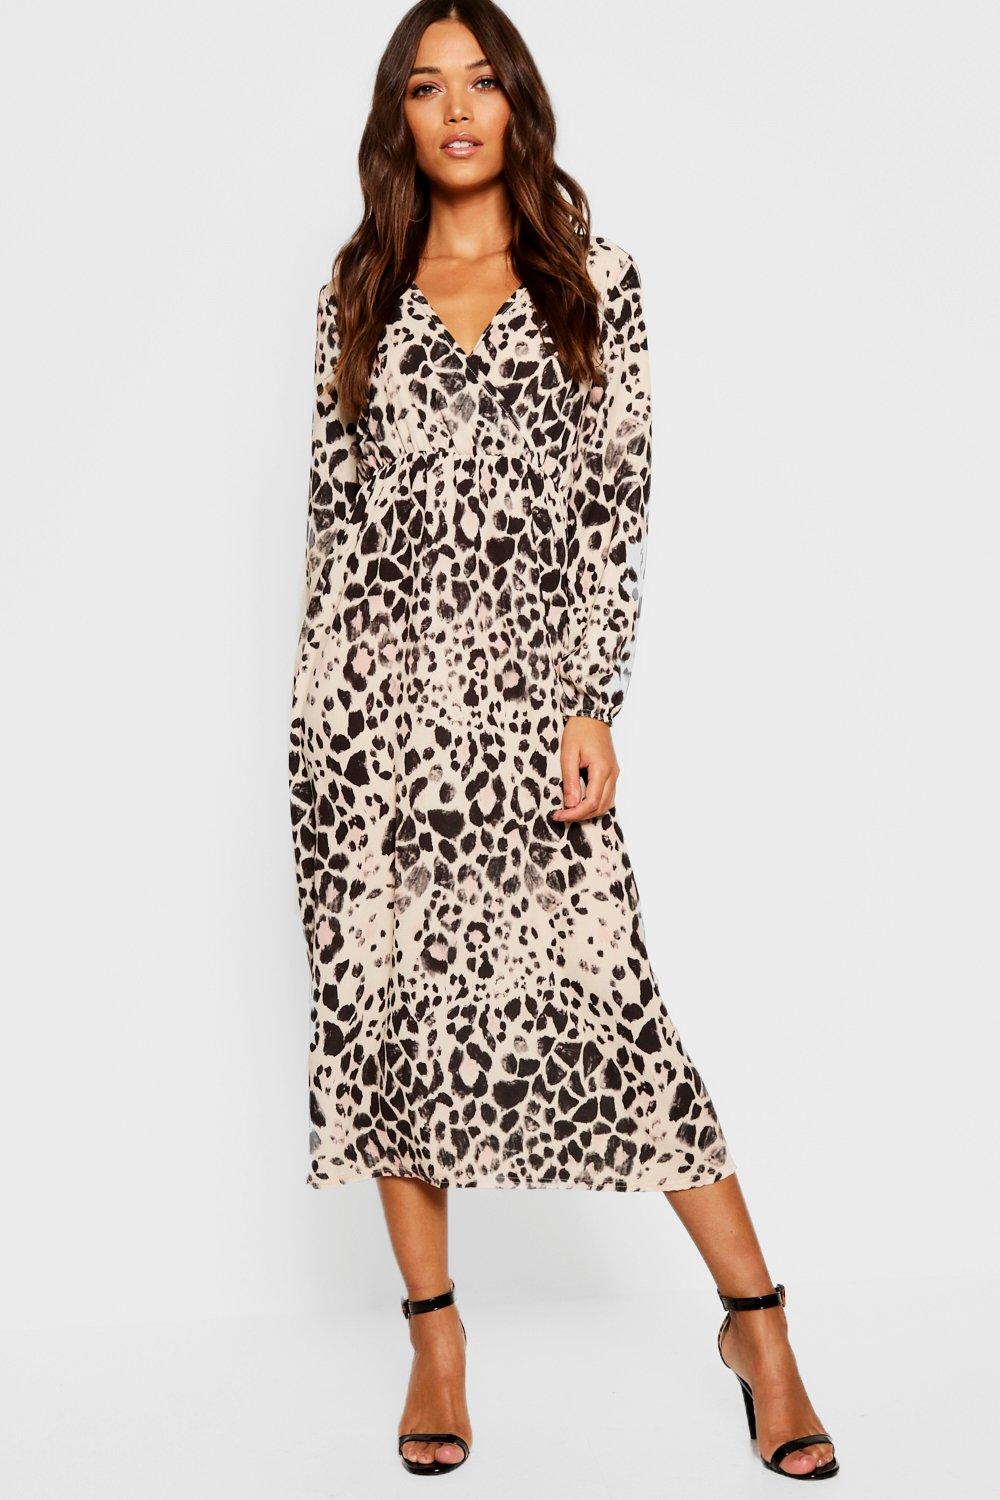 cheetah print long sleeve dress